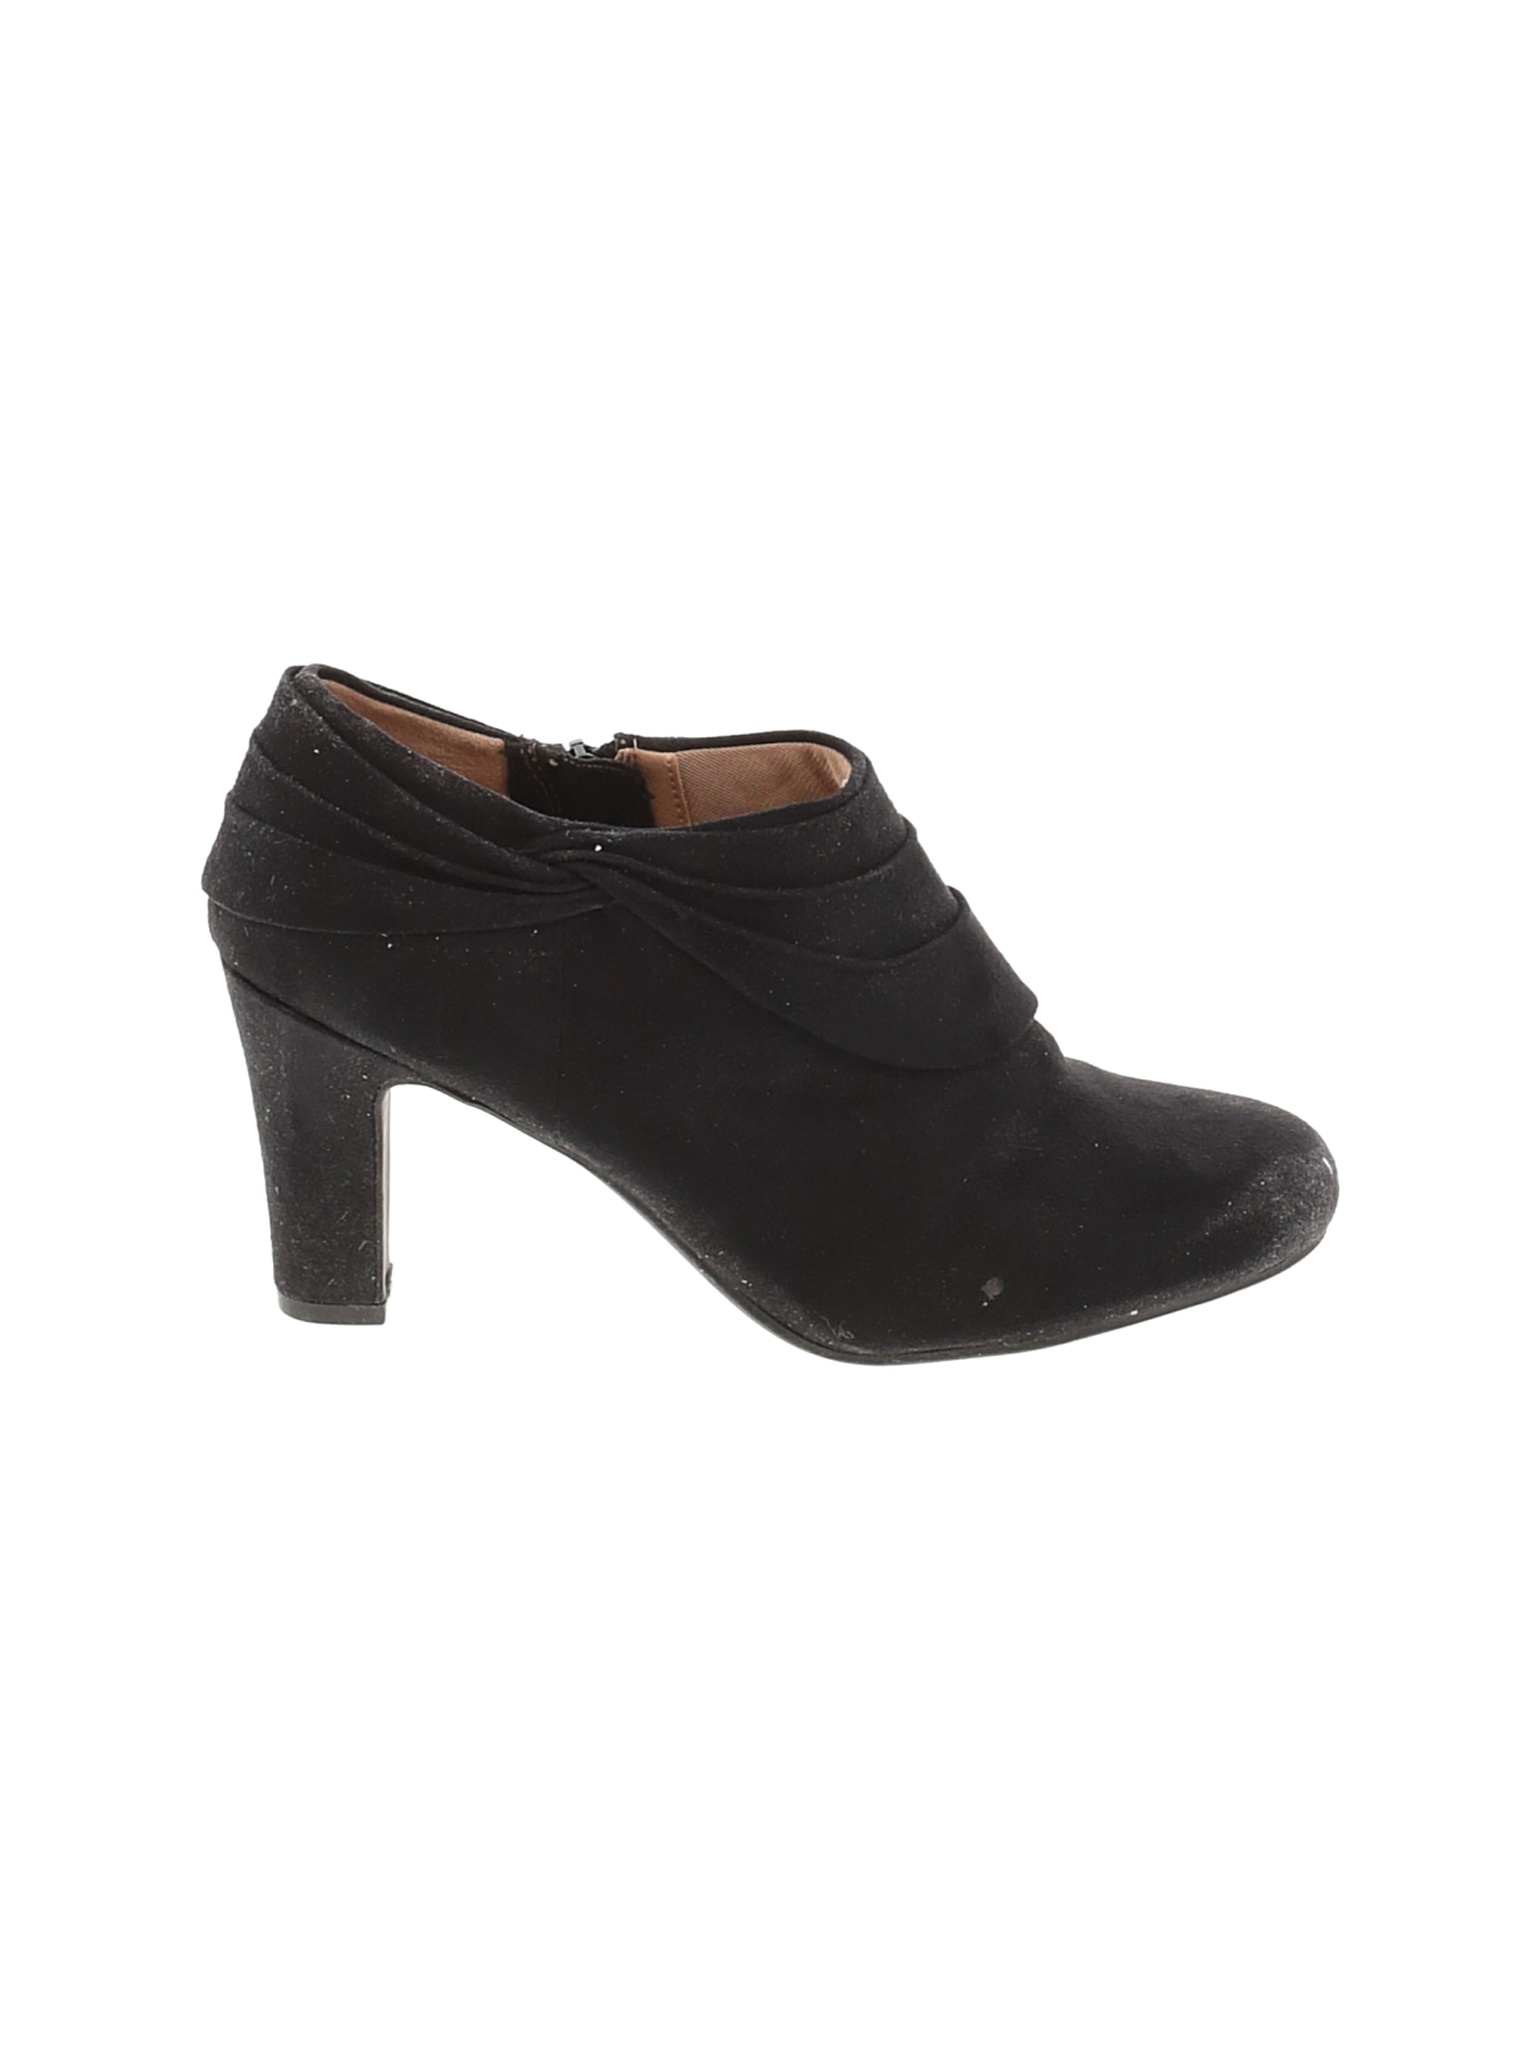 Life Stride Women Black Ankle Boots US 8 | eBay